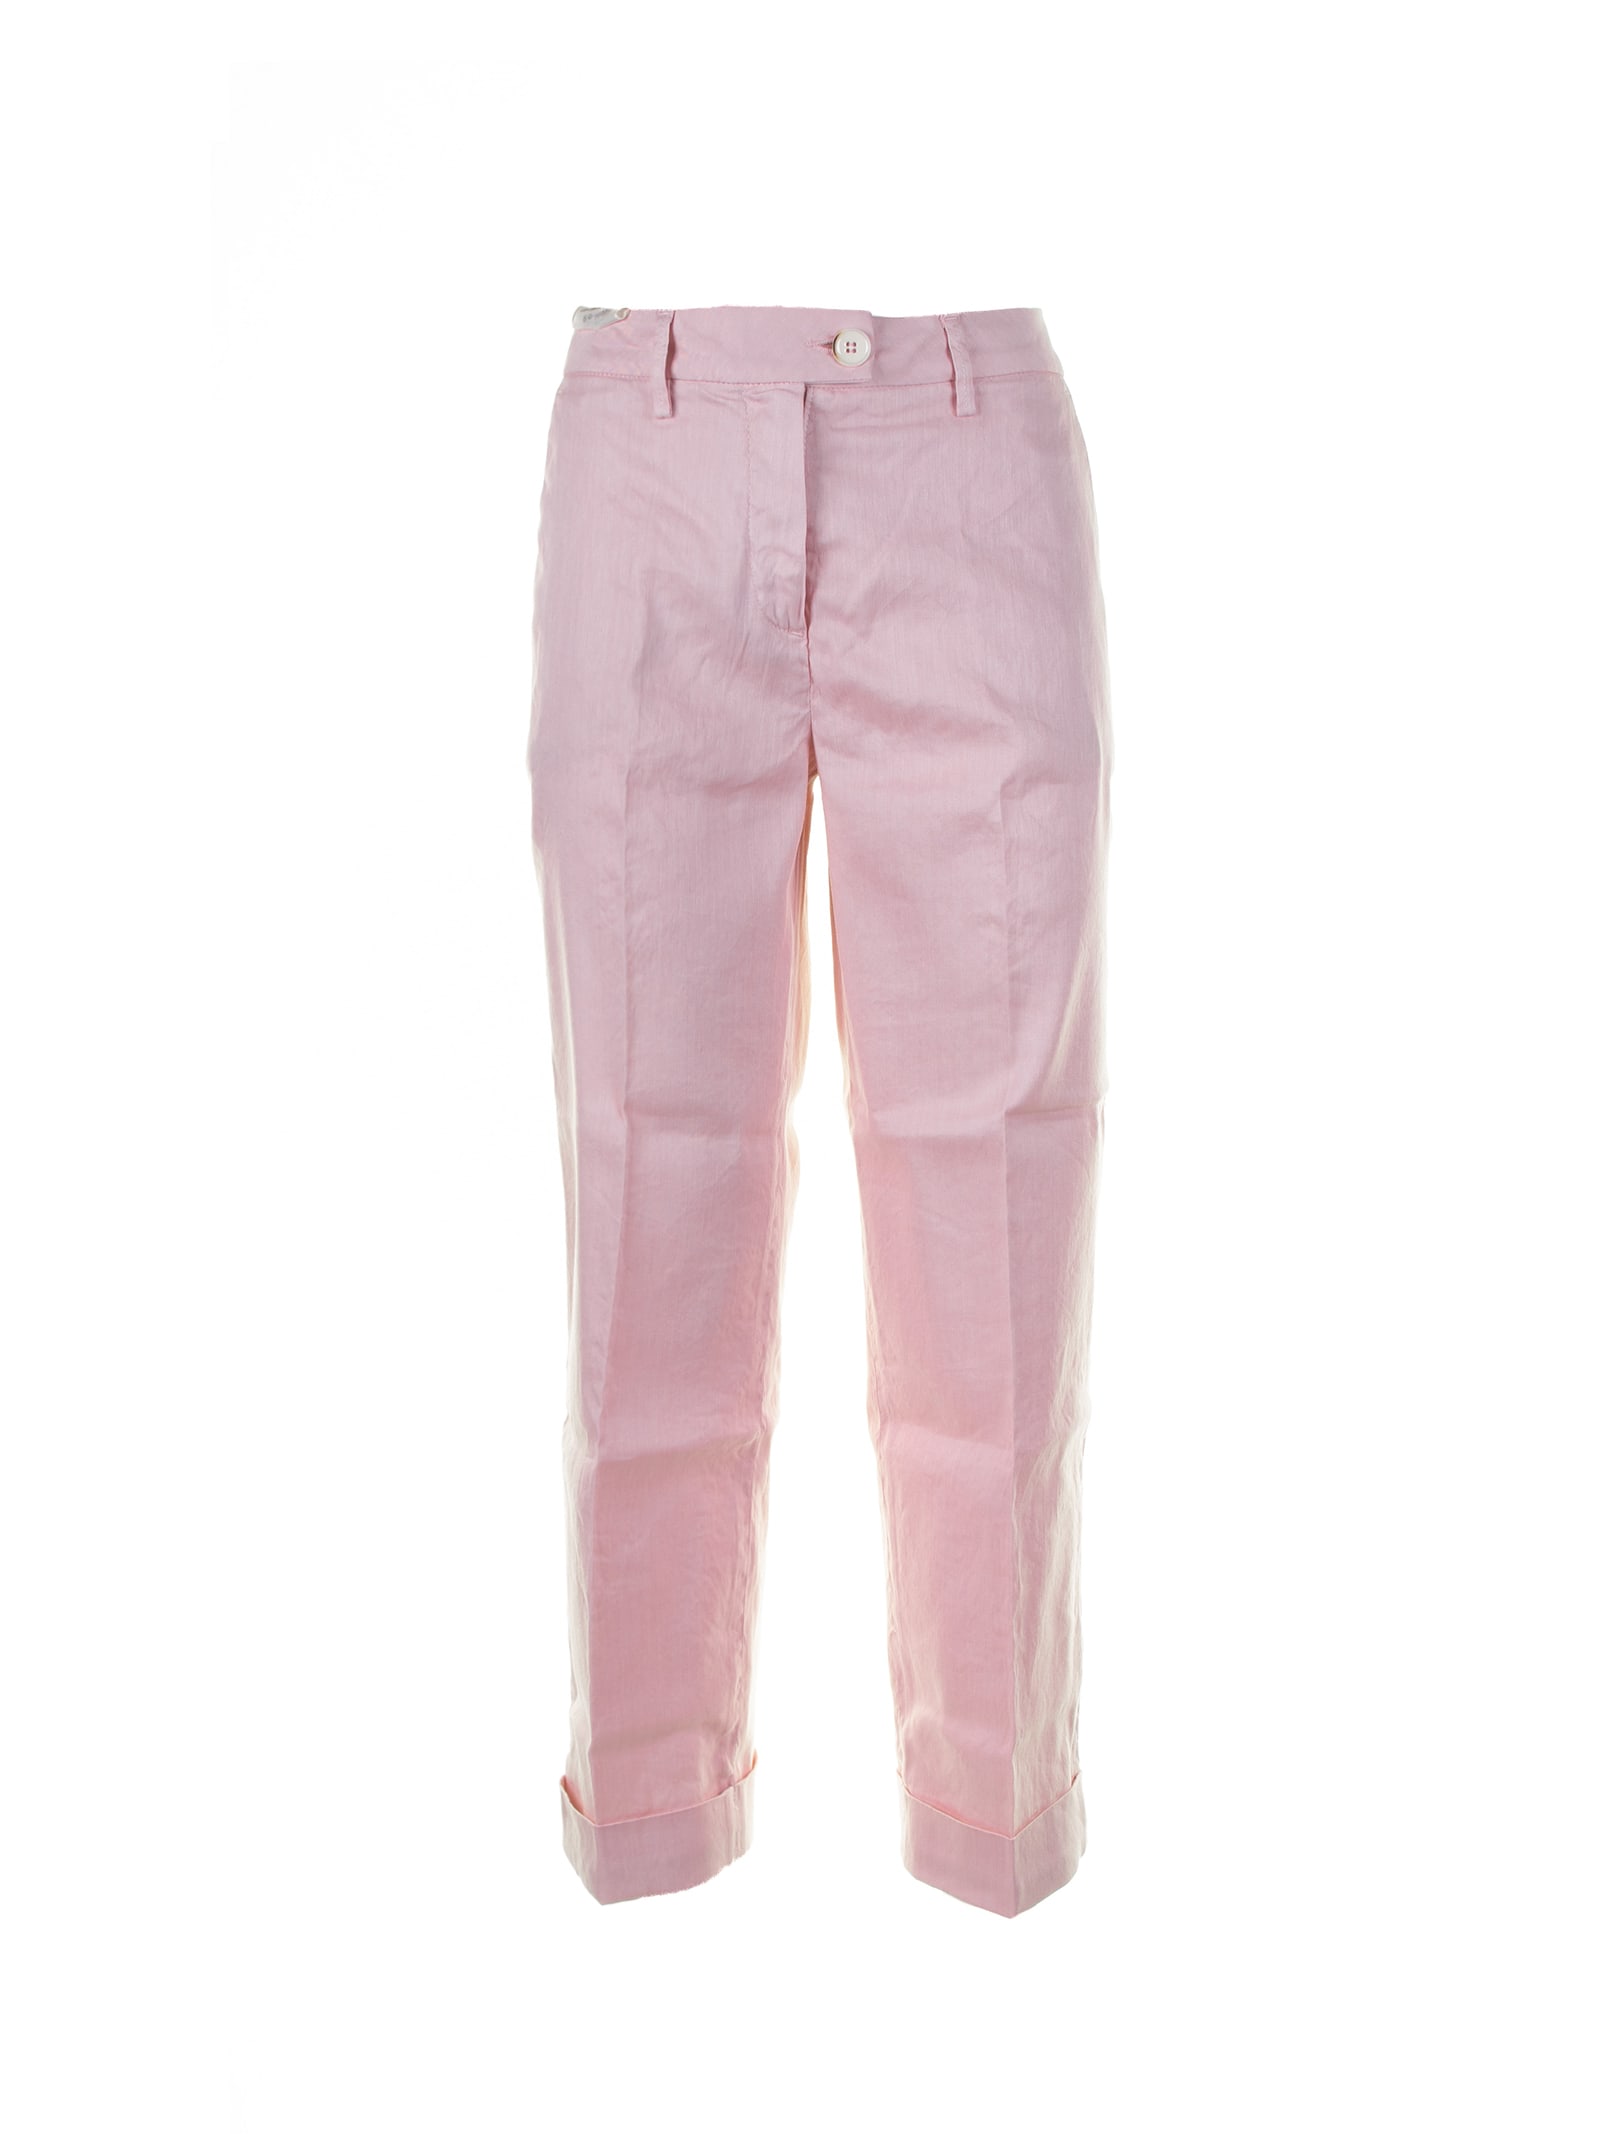 Re-HasH Pink Chino Pants